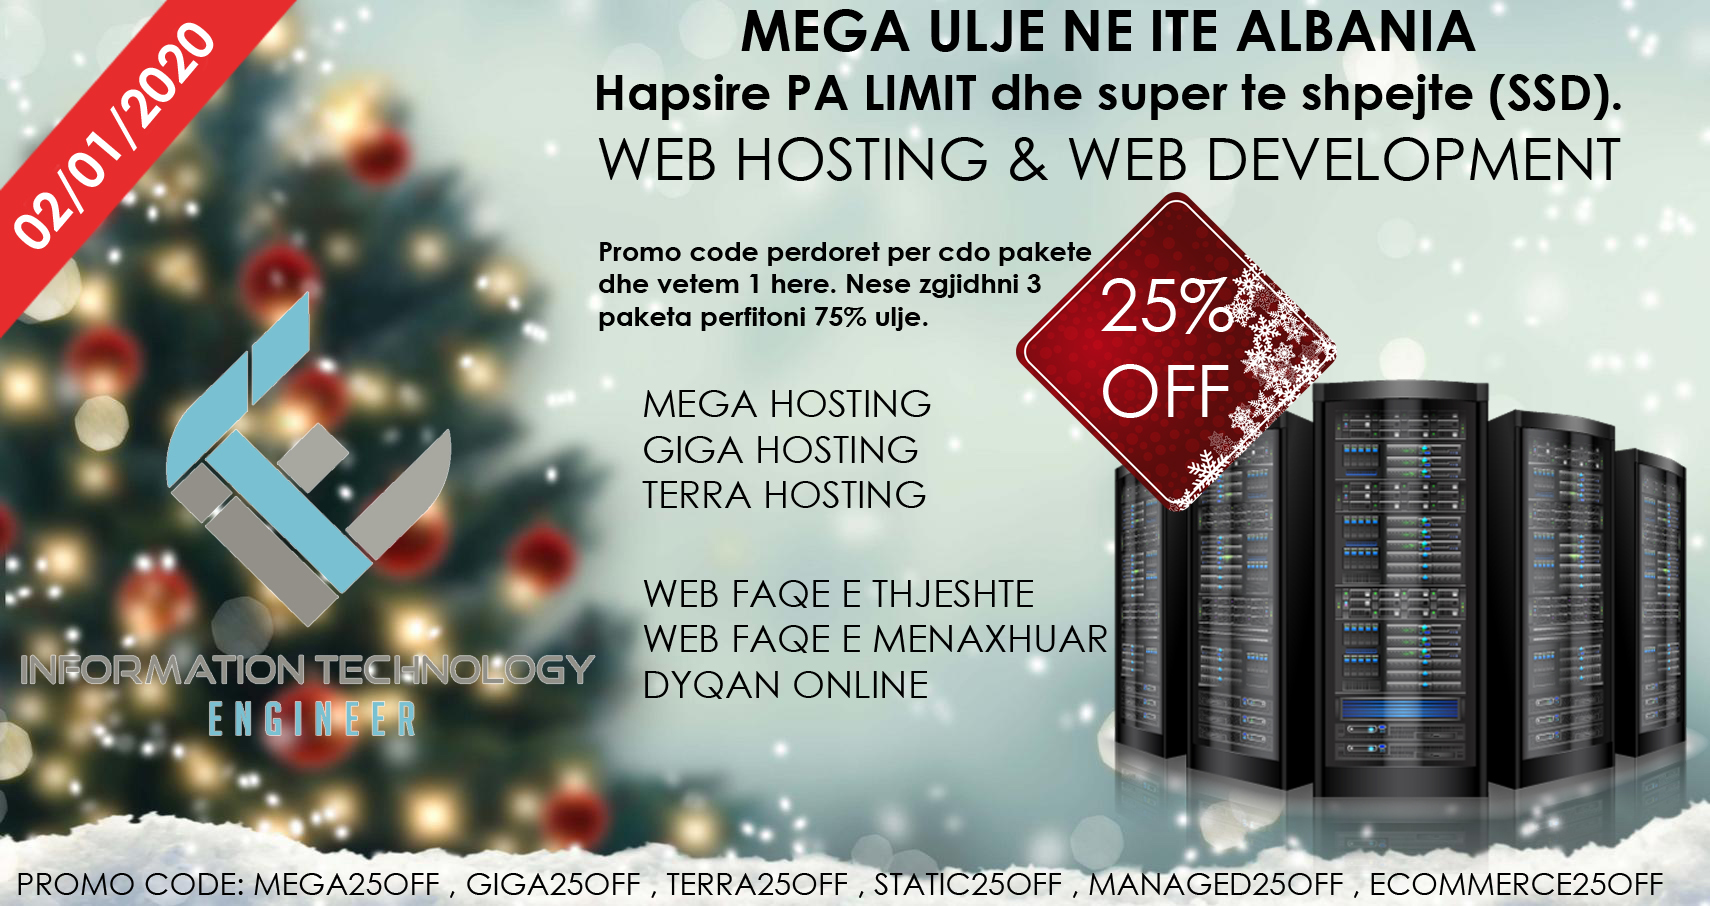 MEGA ULJE NE ITE ALBANIA - iHsot.al - Web Hosting & Web Development Company